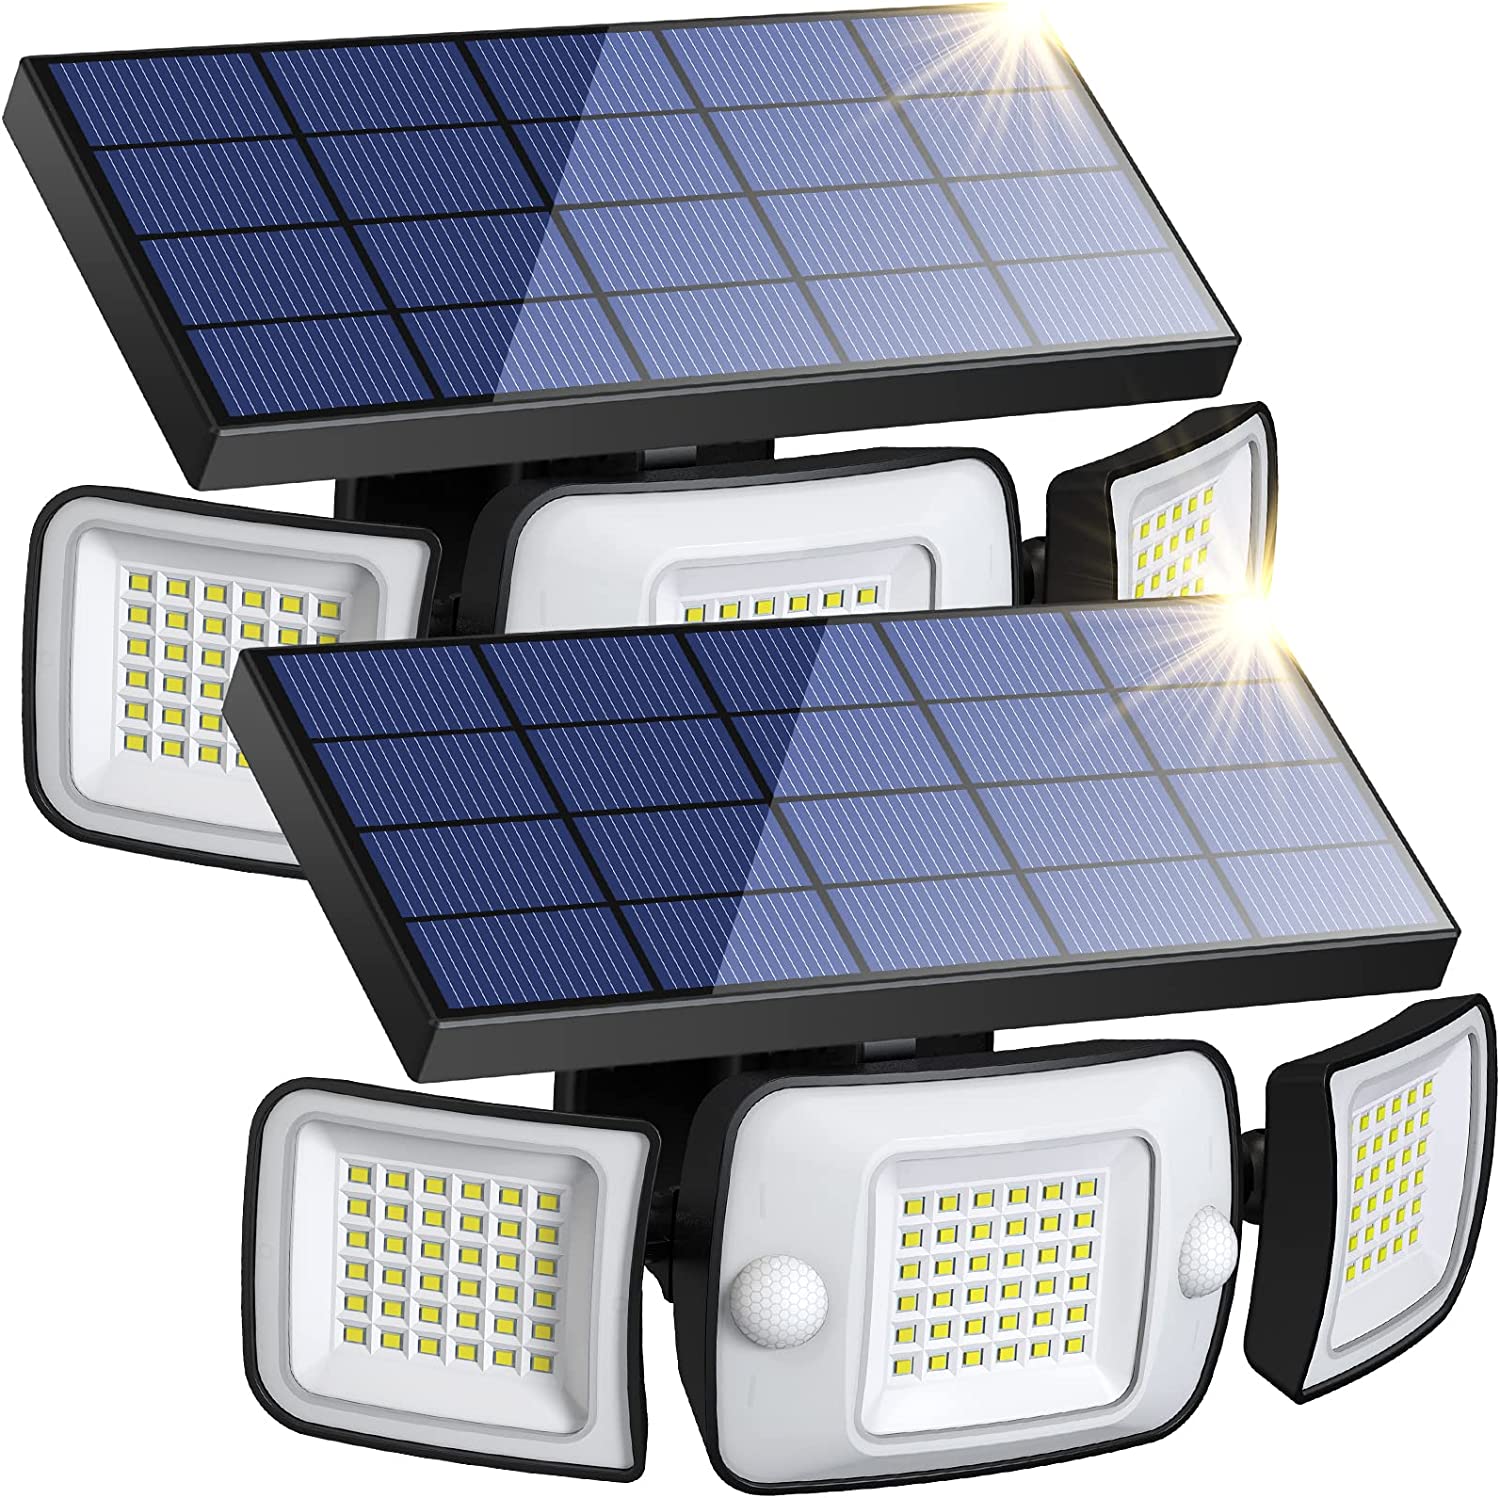 Solar security lights costa blanca